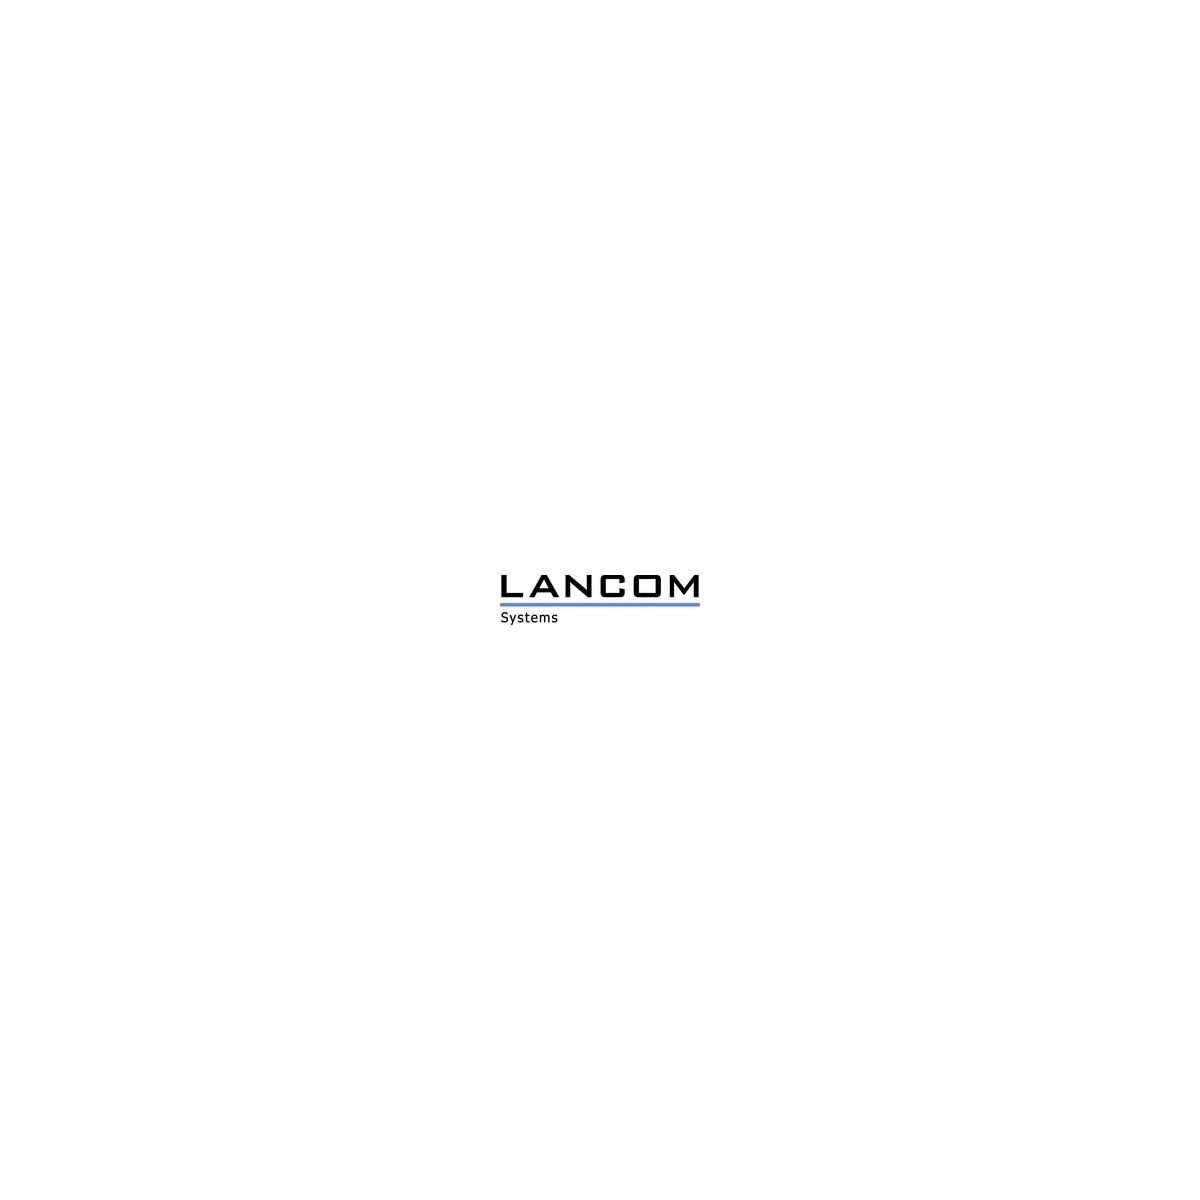 Lancom 10611 - 4 h - Antenna Accessory